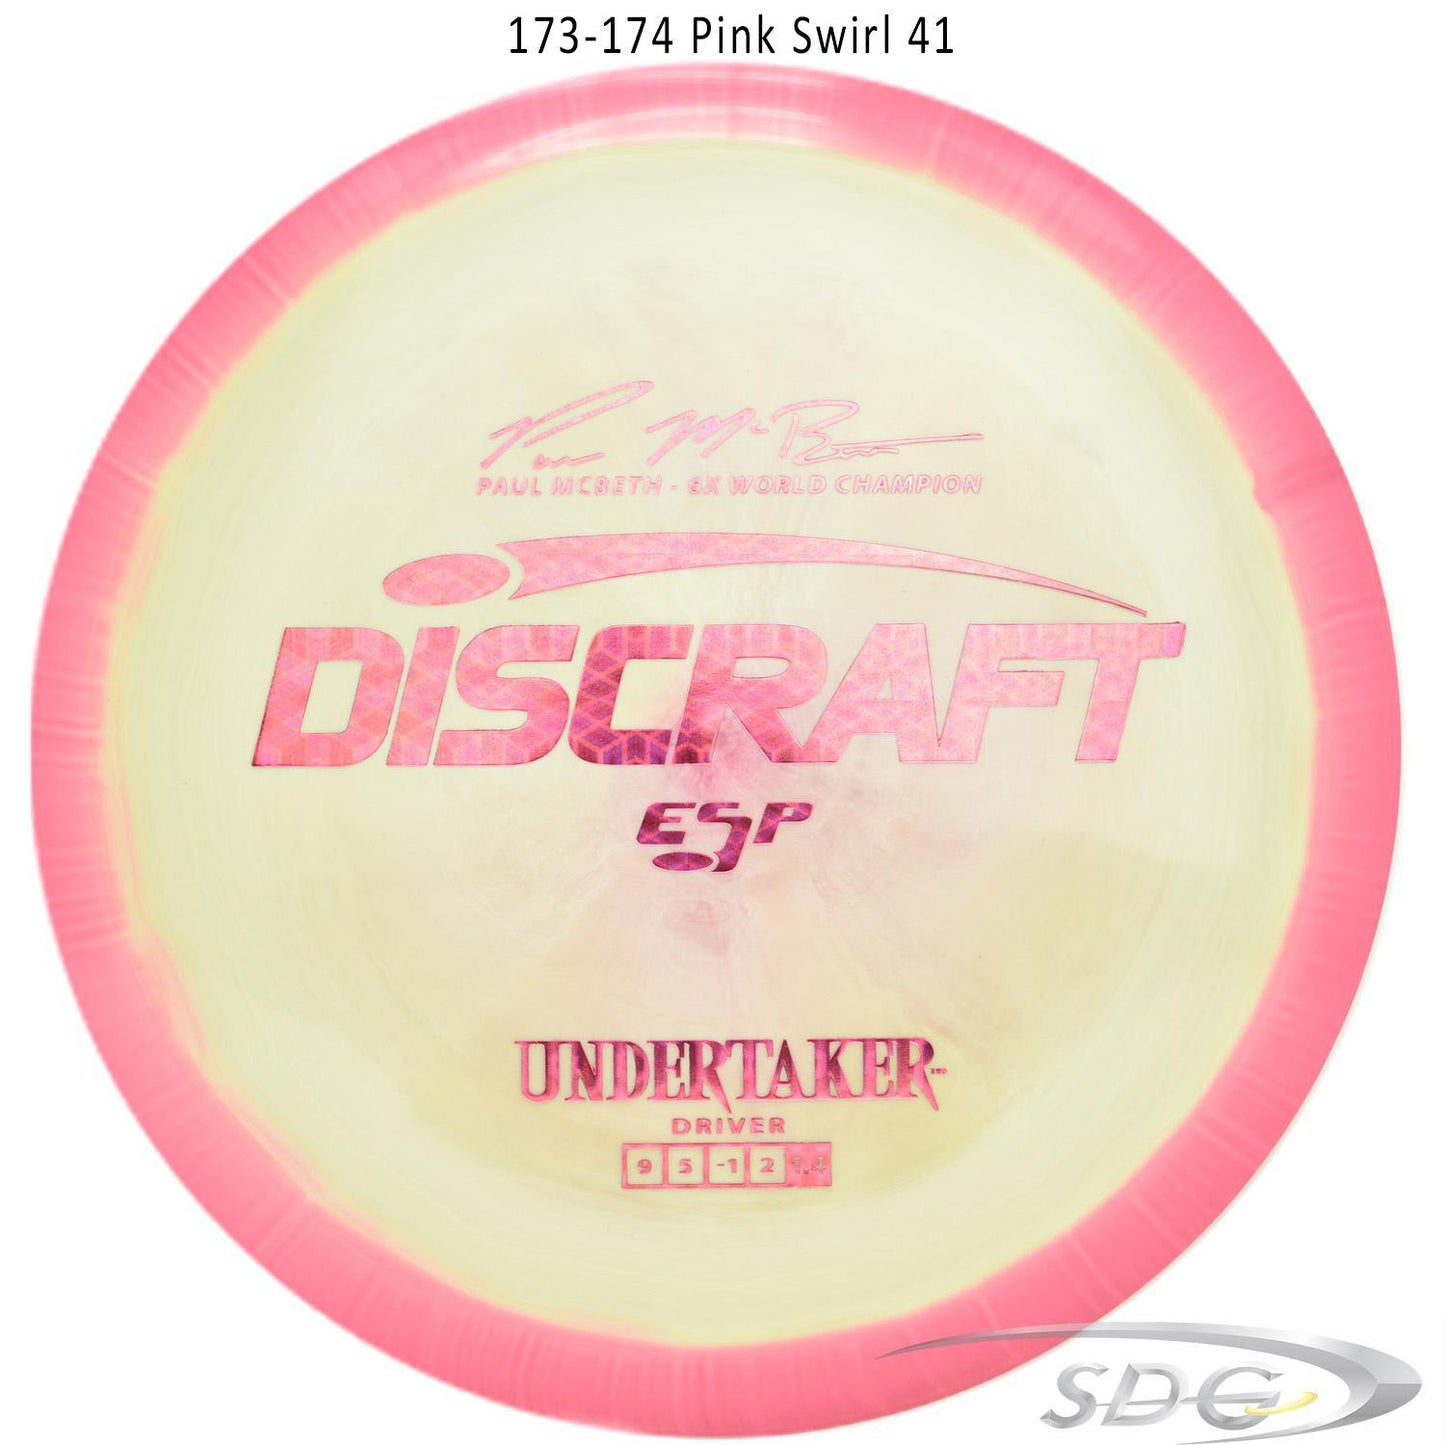 discraft-esp-undertaker-6x-paul-mcbeth-signature-series-disc-golf-distance-driver 173-174 Pink Swirl 41